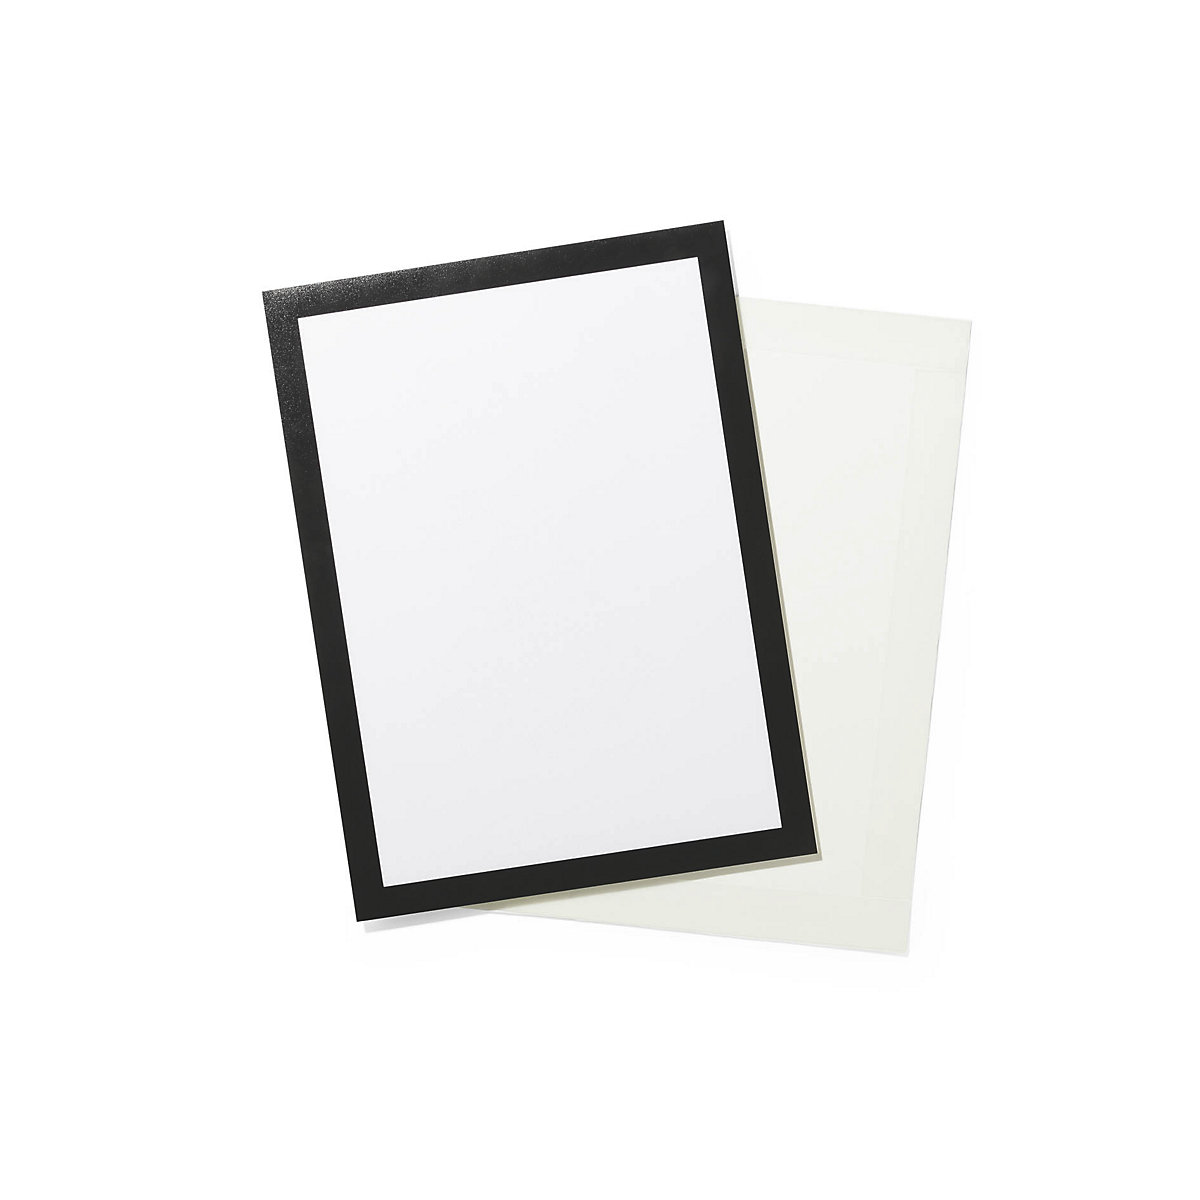 DURAFRAME® GRIP A4 foil frame with Velcro strips – DURABLE